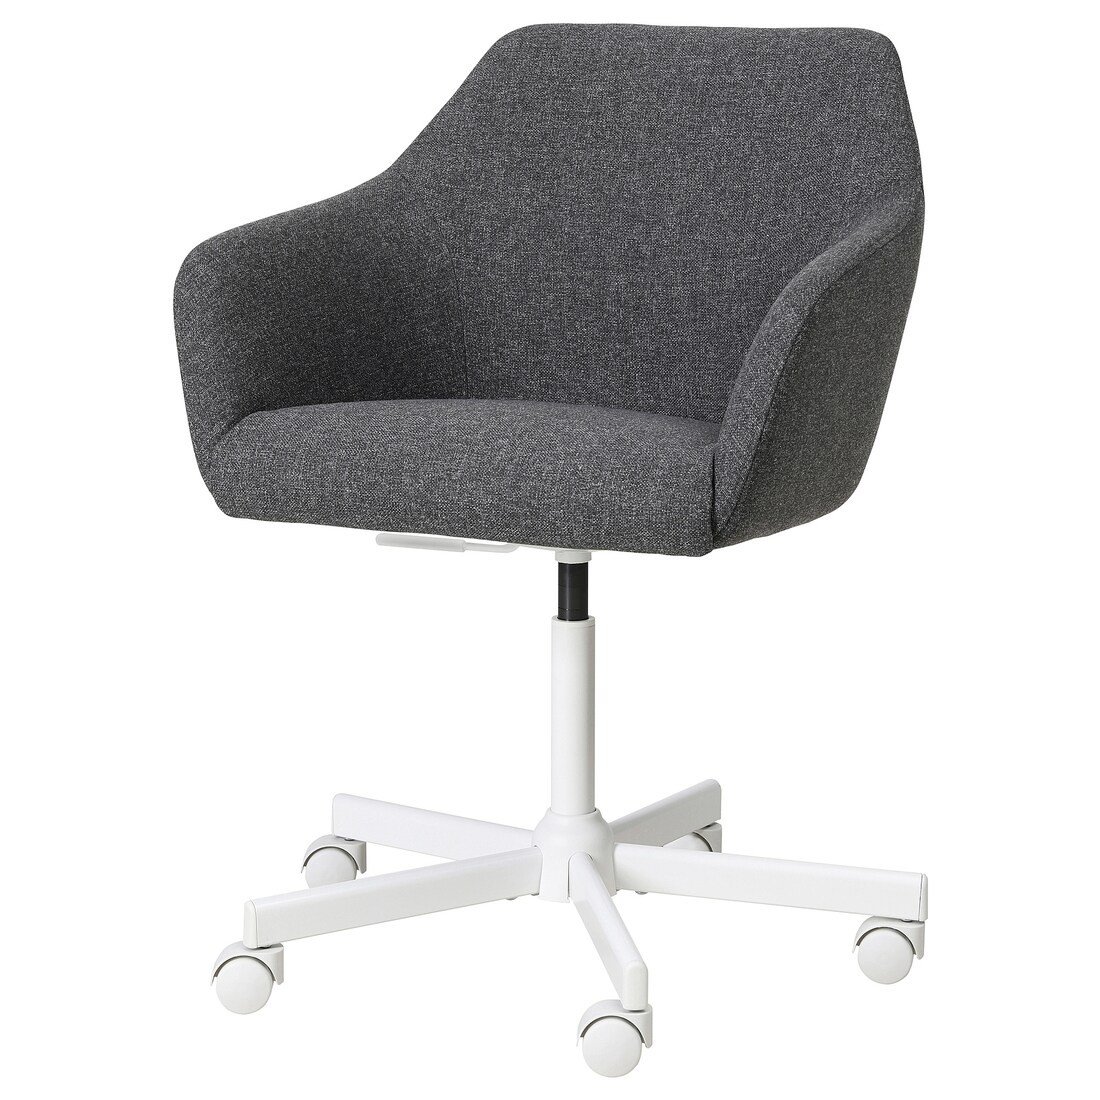 TOSSBERG / MALSKÄR Офісне крісло, Gunnared темно-сірий / білий